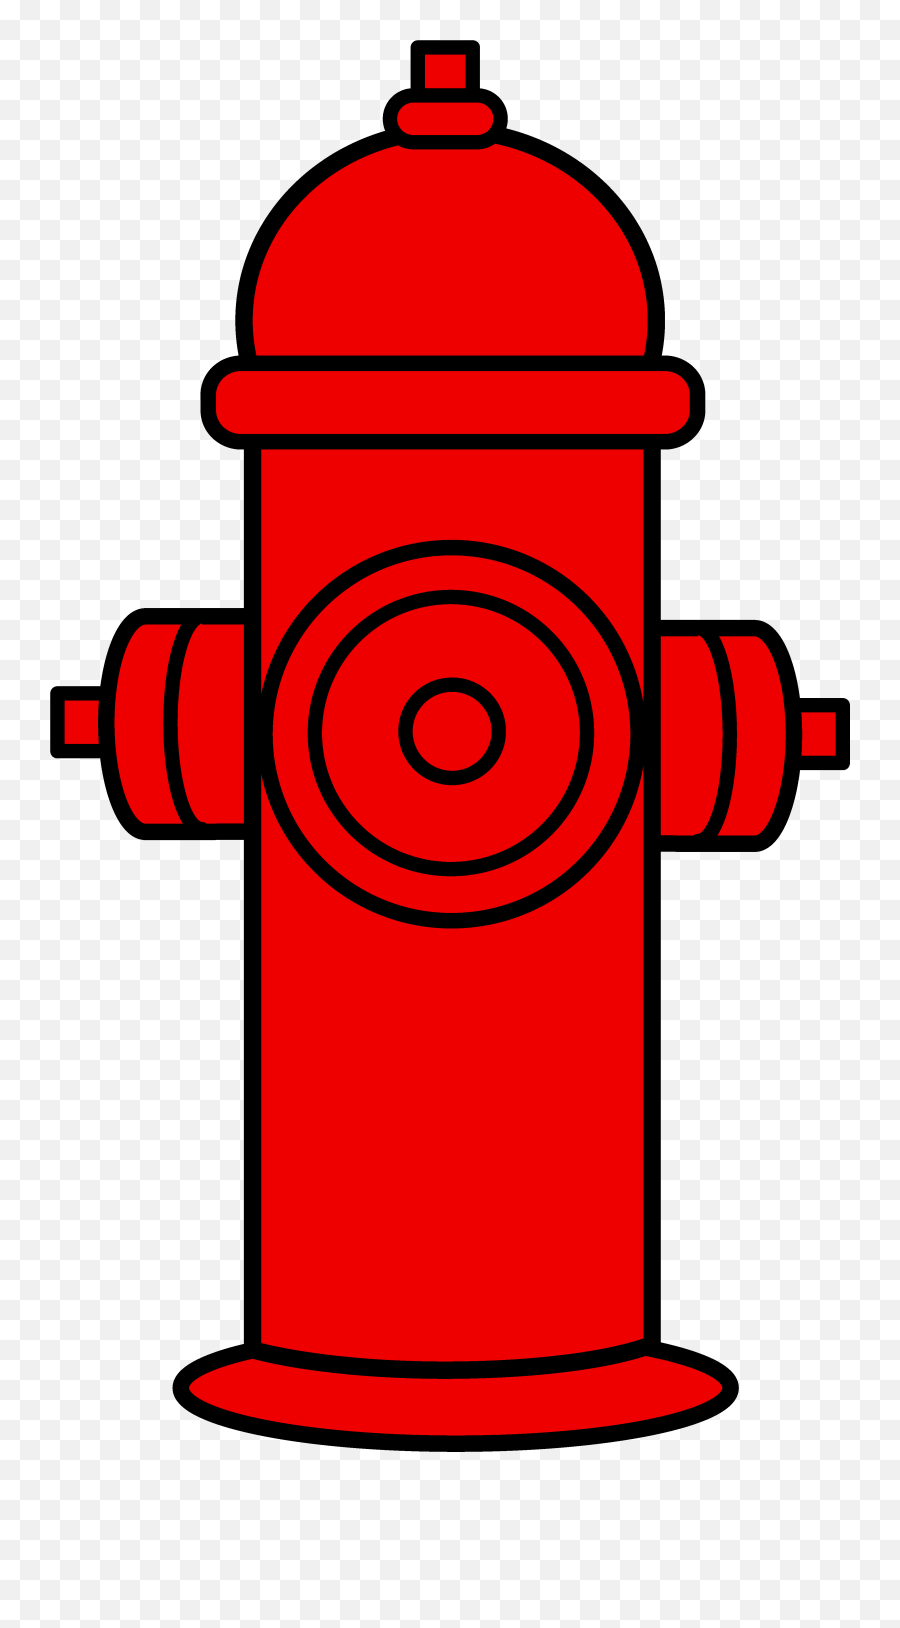 Red Fire Hydrant Clipart - Clip Art Fire Hydrant Emoji,Fire Hydrant Emoji